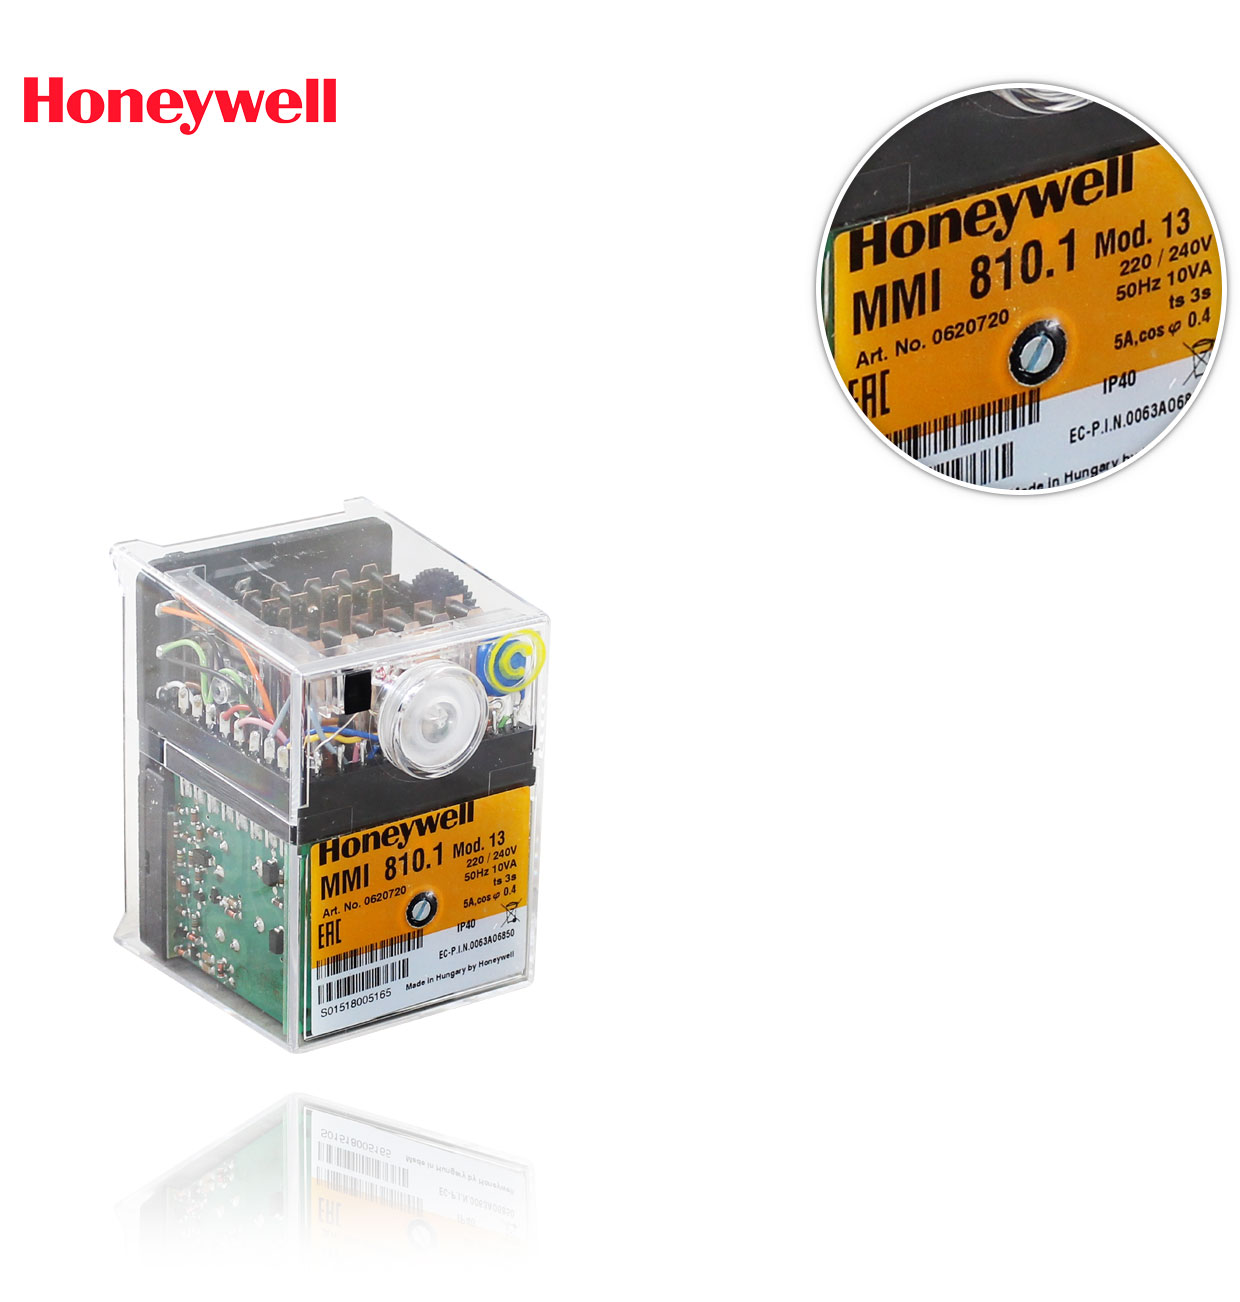 MMI 810.1 (Mod.13)  CONTROL BOX SATRONIC/ HONEYWELL